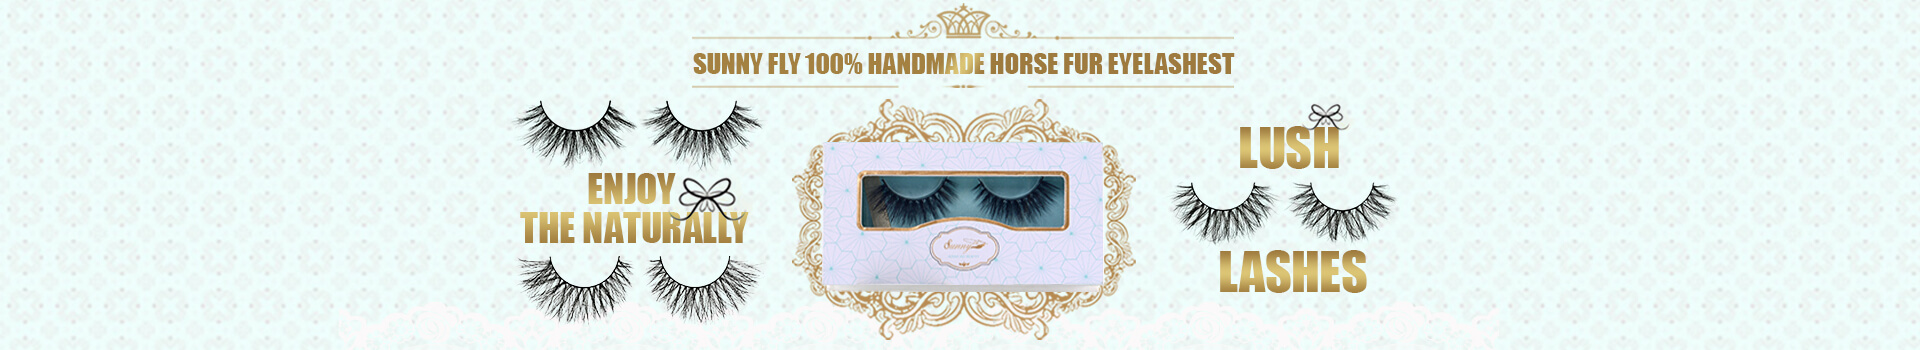 Real Horse Fur Eyesashes HF45